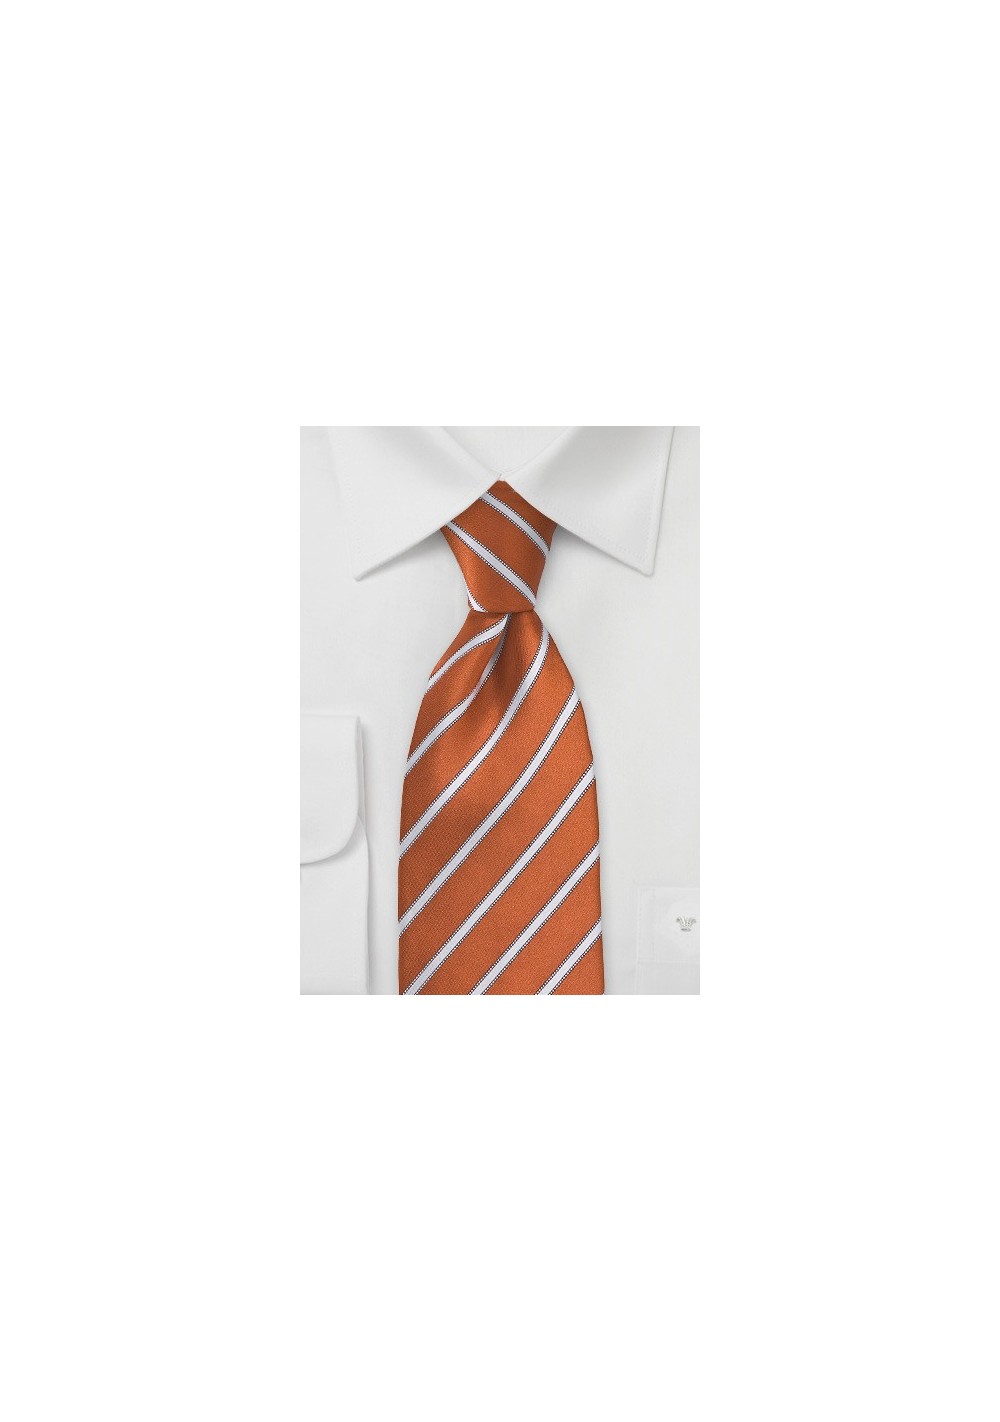 Kid Sized Tie in Burnt Orange and White